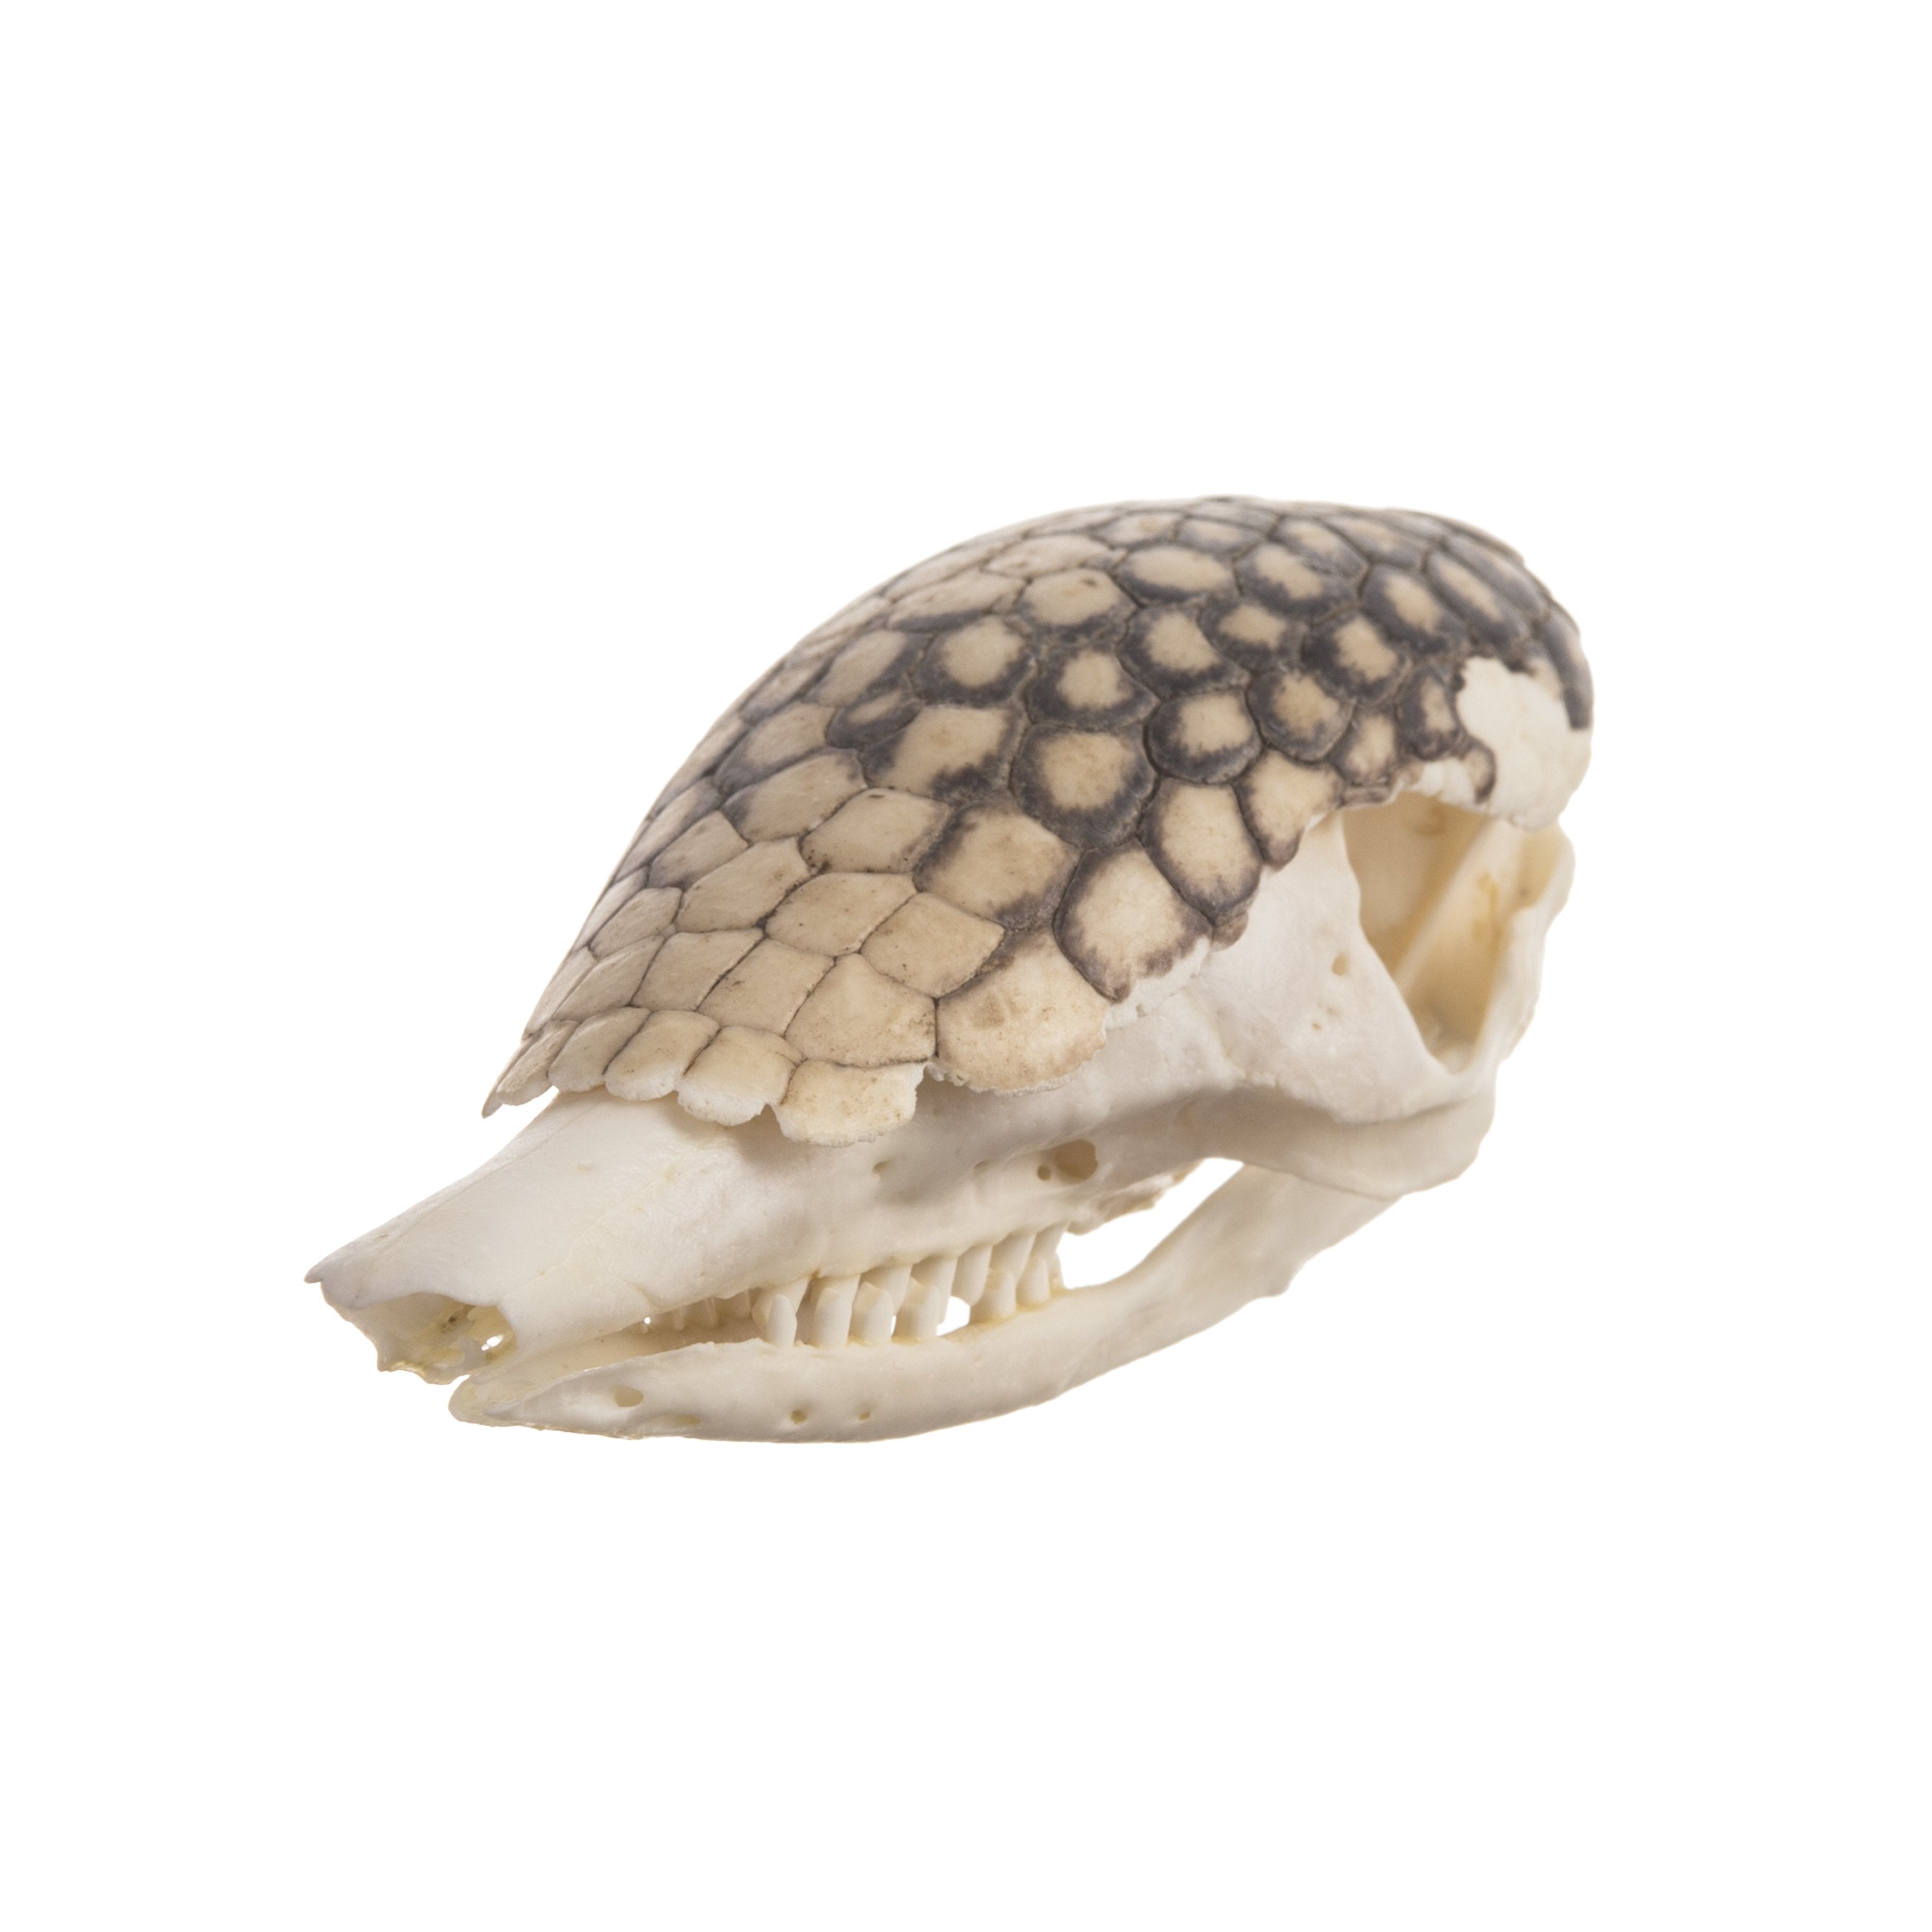 armadillo lizard skull for sale